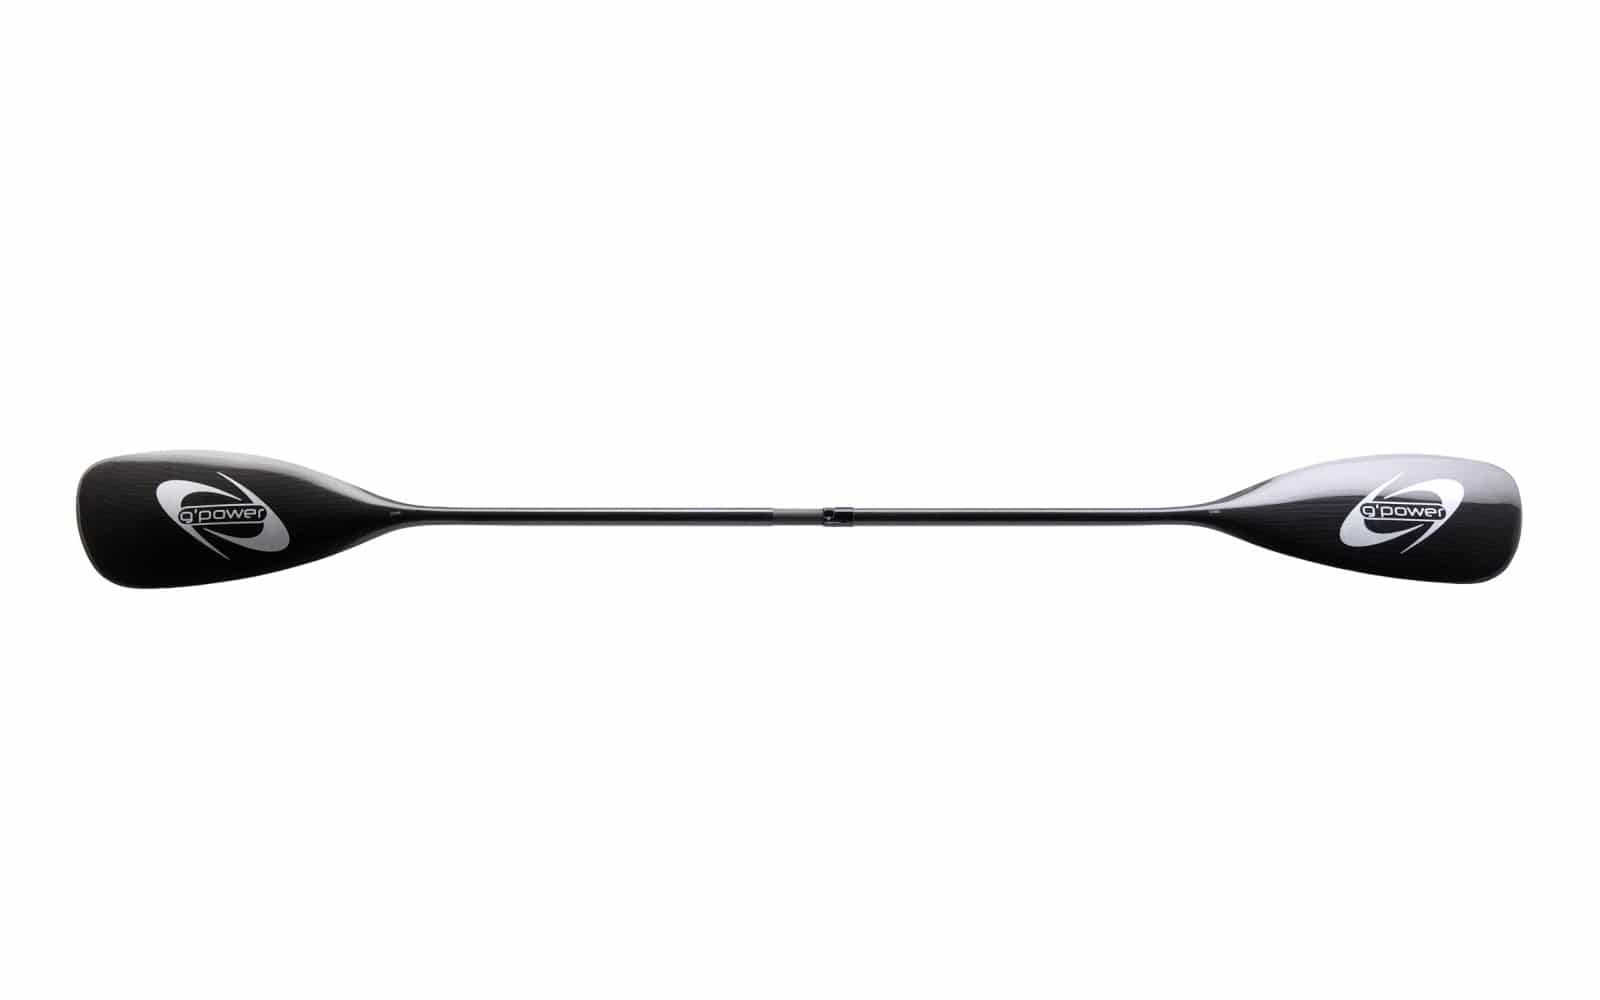 Carbon fiber paddles Slalom - Rile Spoon